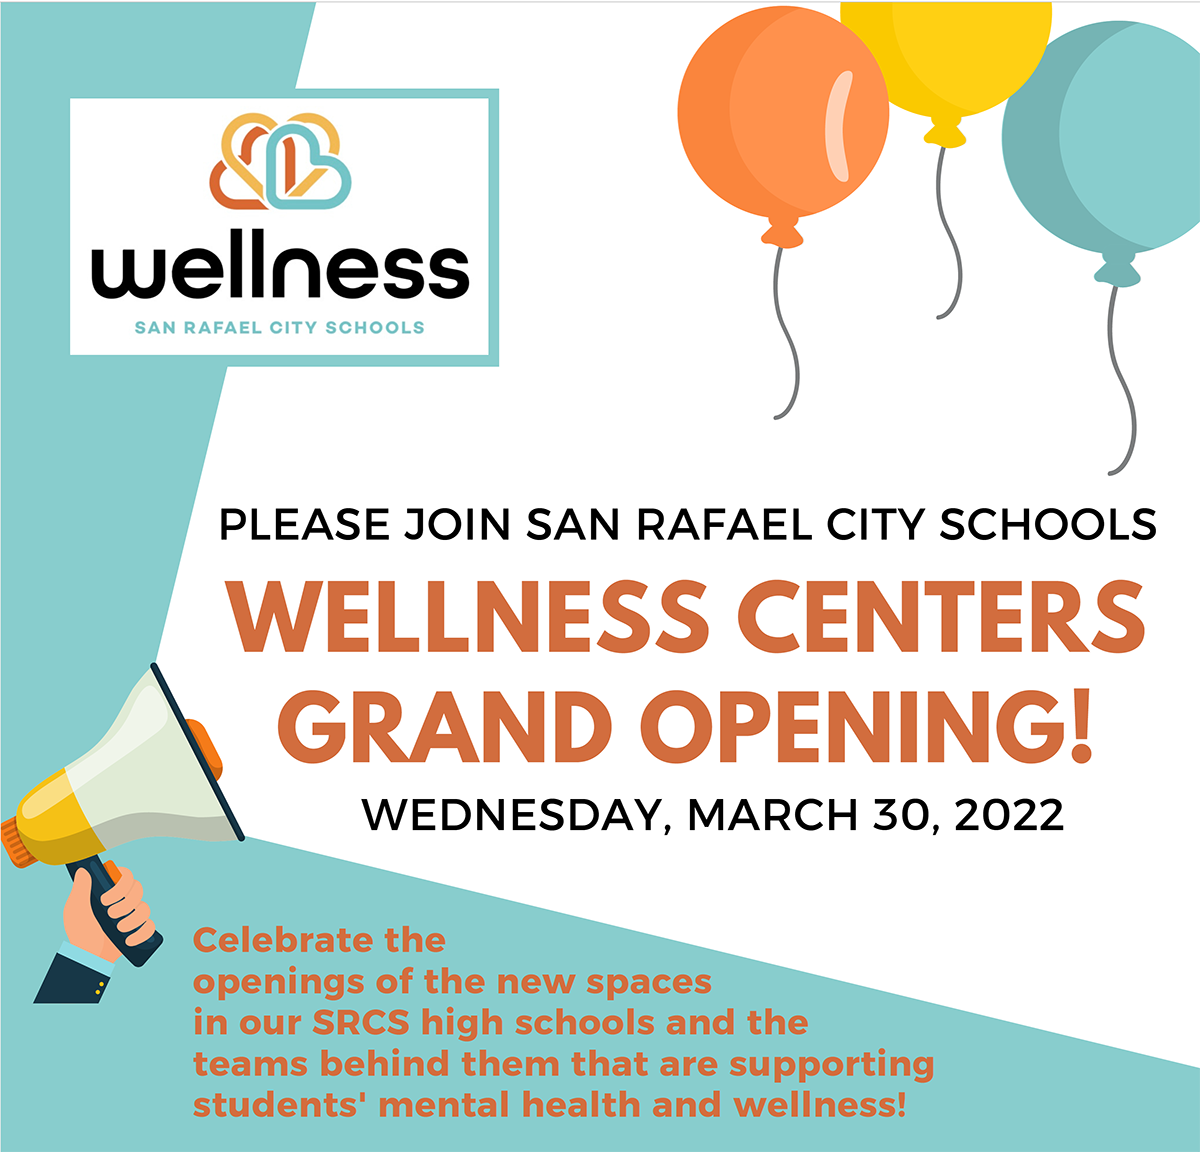 San Rafael City Schools Wellness Centers Grand Opening Wed March 30, 2022